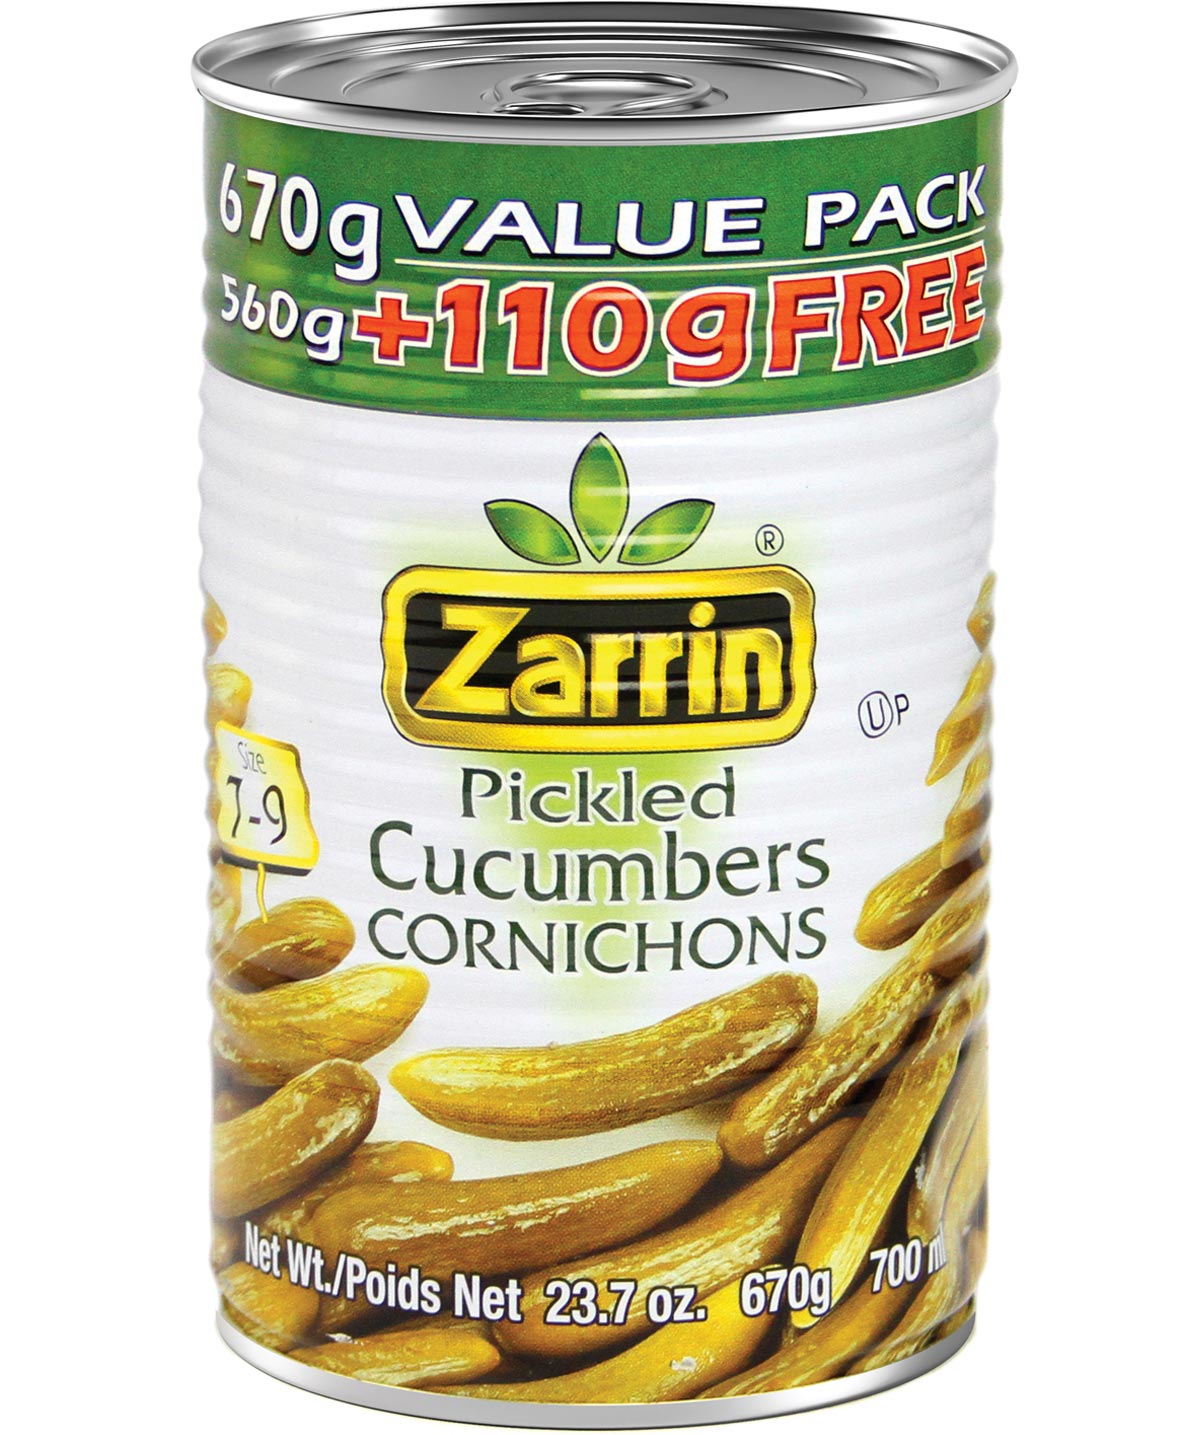 Zarrin Pickled Cucumbers 7-9 + 20% Free